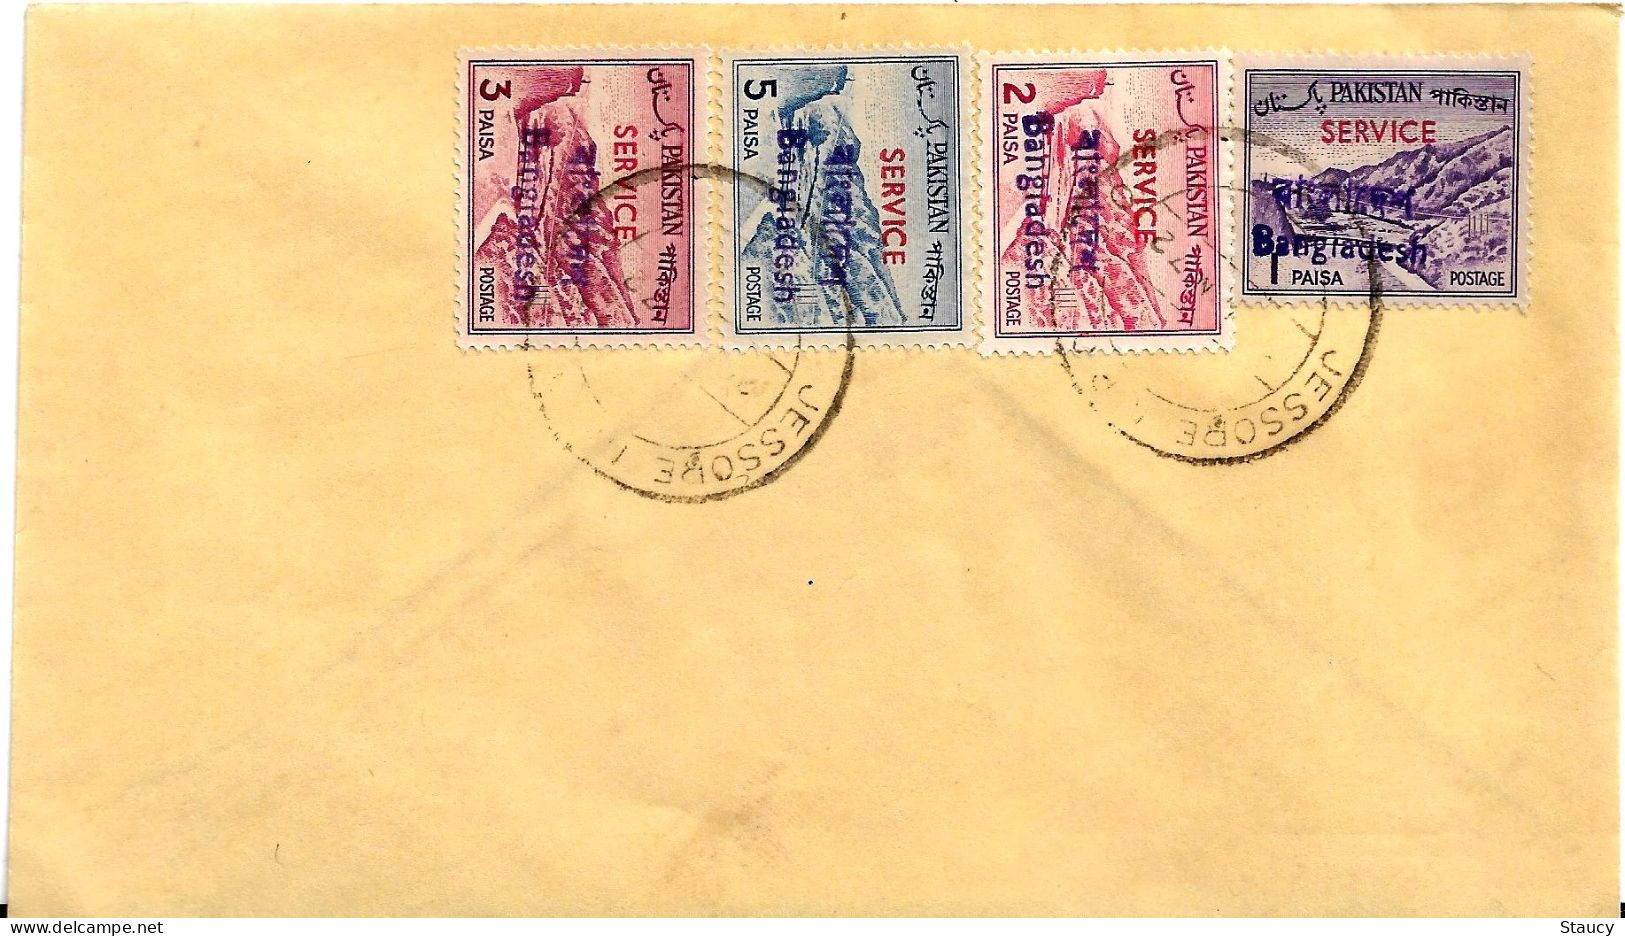 PAKISTAN BANGLADESH 1972 MULTIPLE Overprint On Pakistan Stamps FRANKING COVER Ex. Rare As Per Scan - Bangladesch